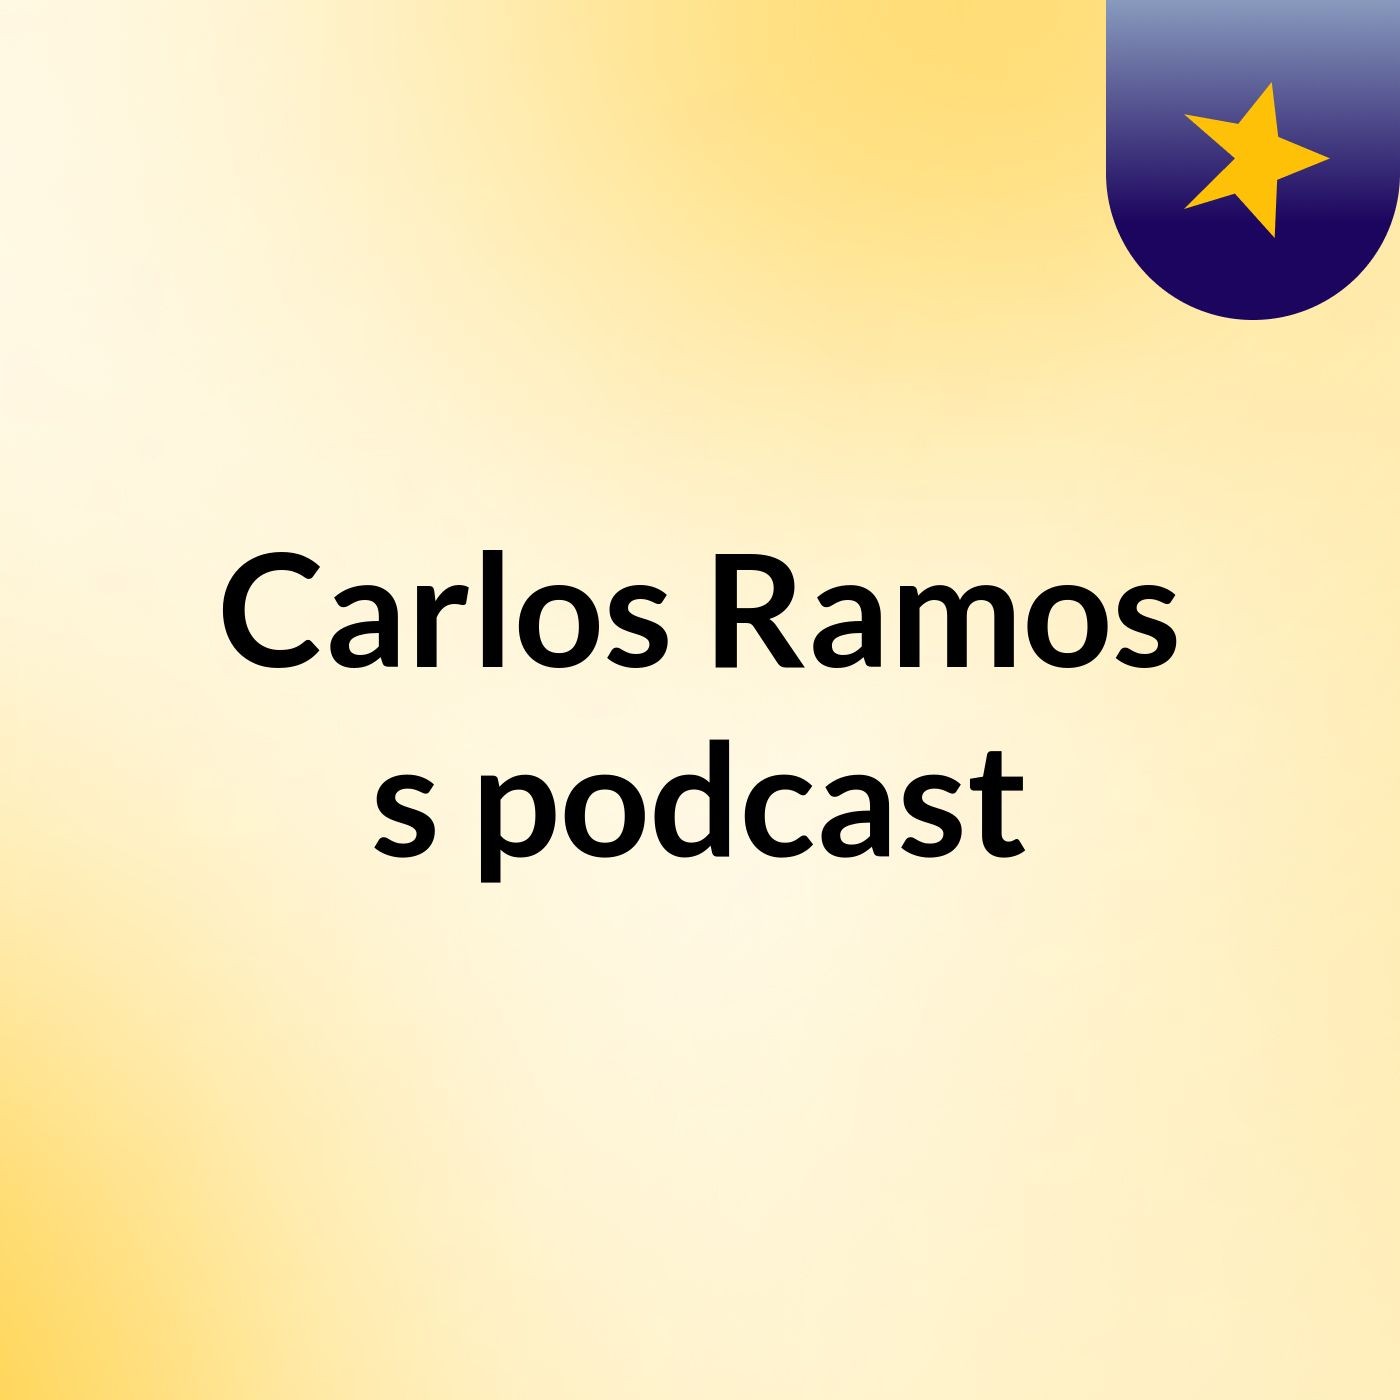 Carlos Ramos's podcast